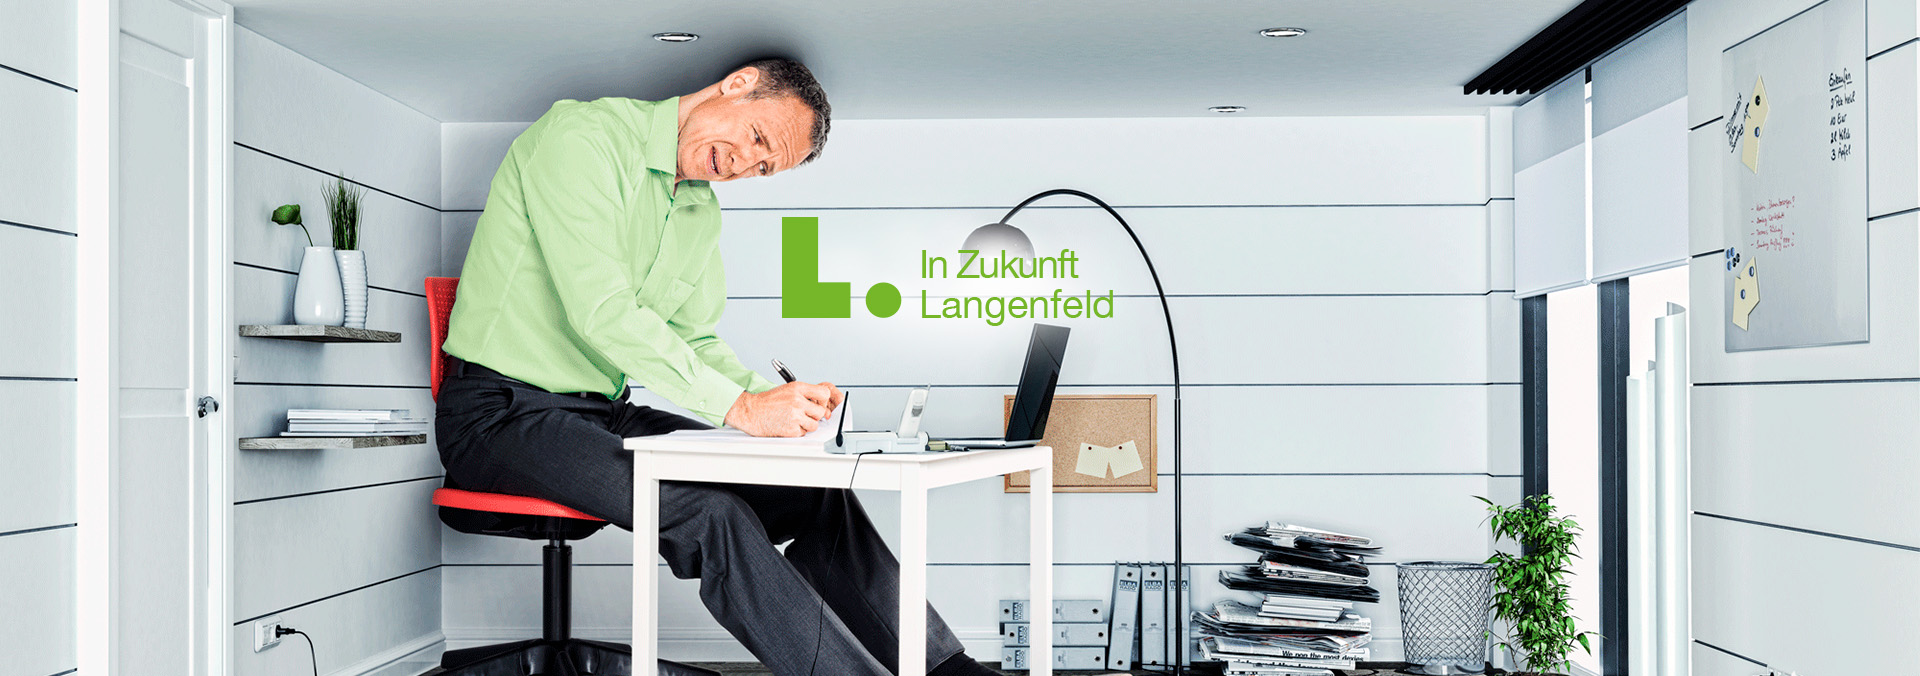 Marketing Kampagne Stadt Langenfeld Header